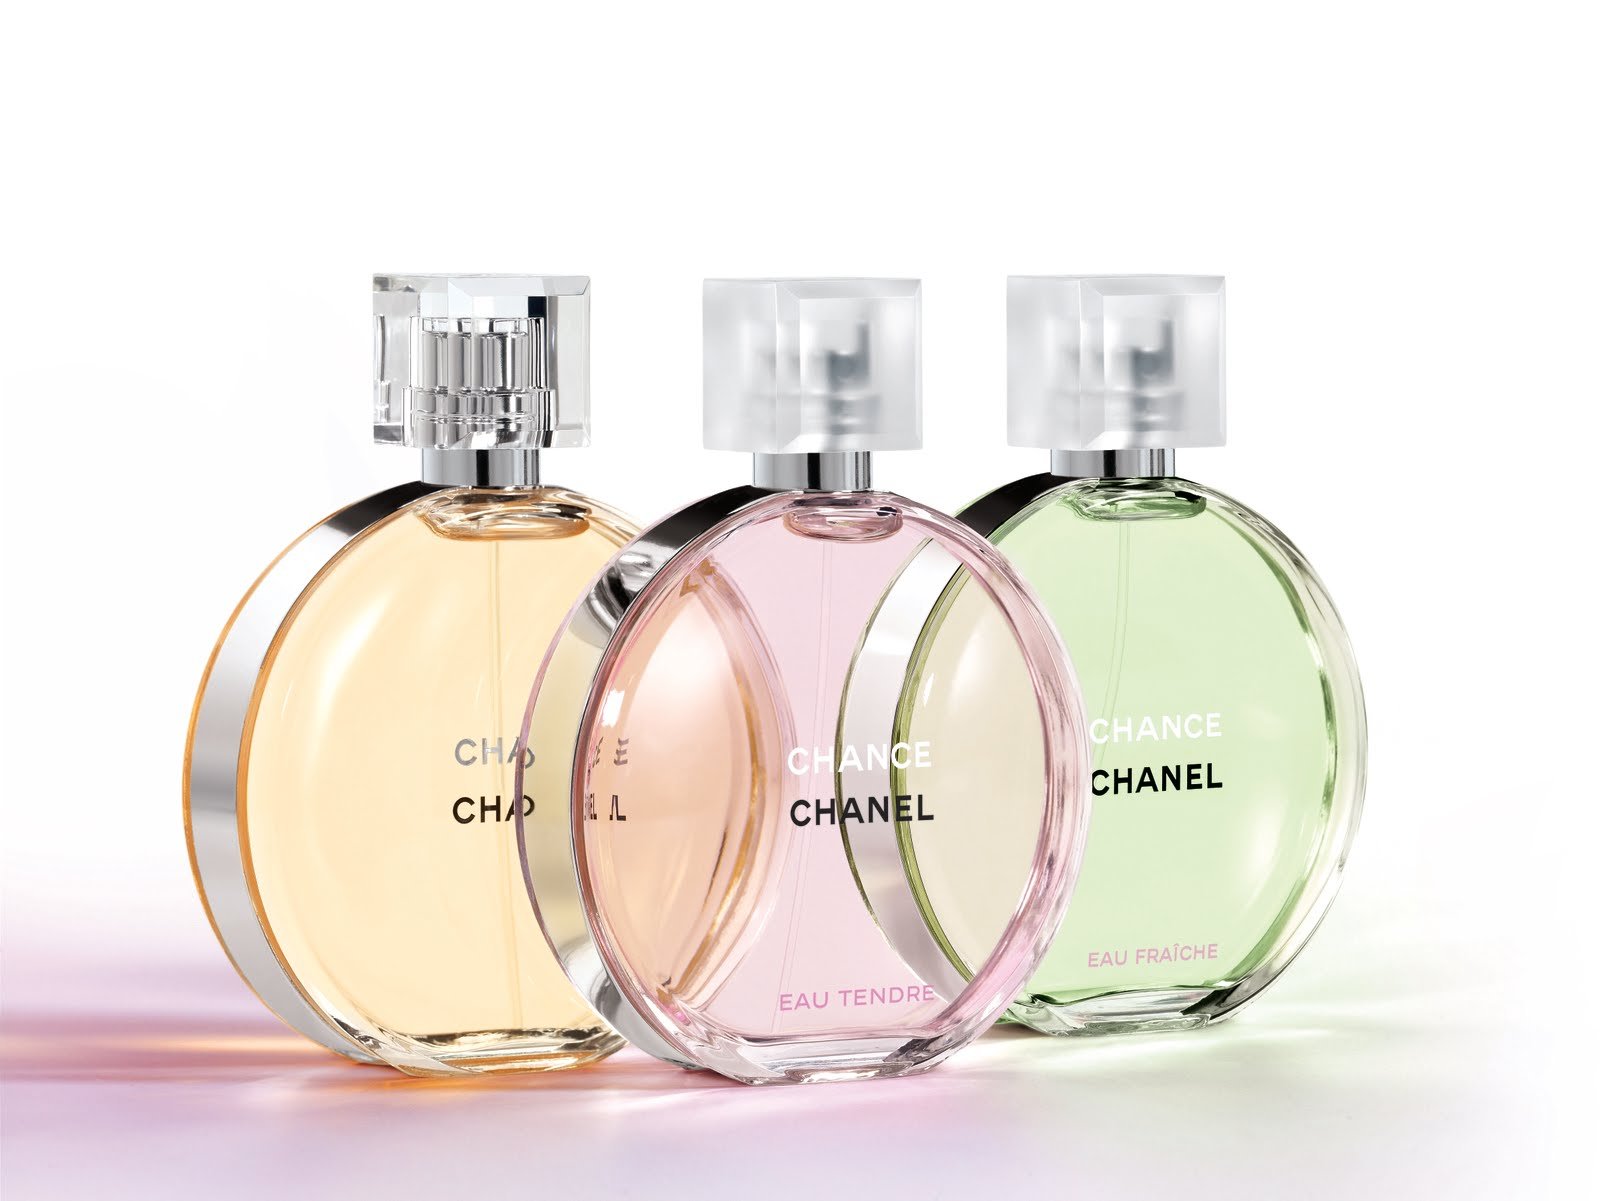 Chanel chance парфюмерная. Шанель шанс Фреш. Chanel chance Parfum. Chanel chance w EDT 50 ml. Коко Шанель шанс духи.